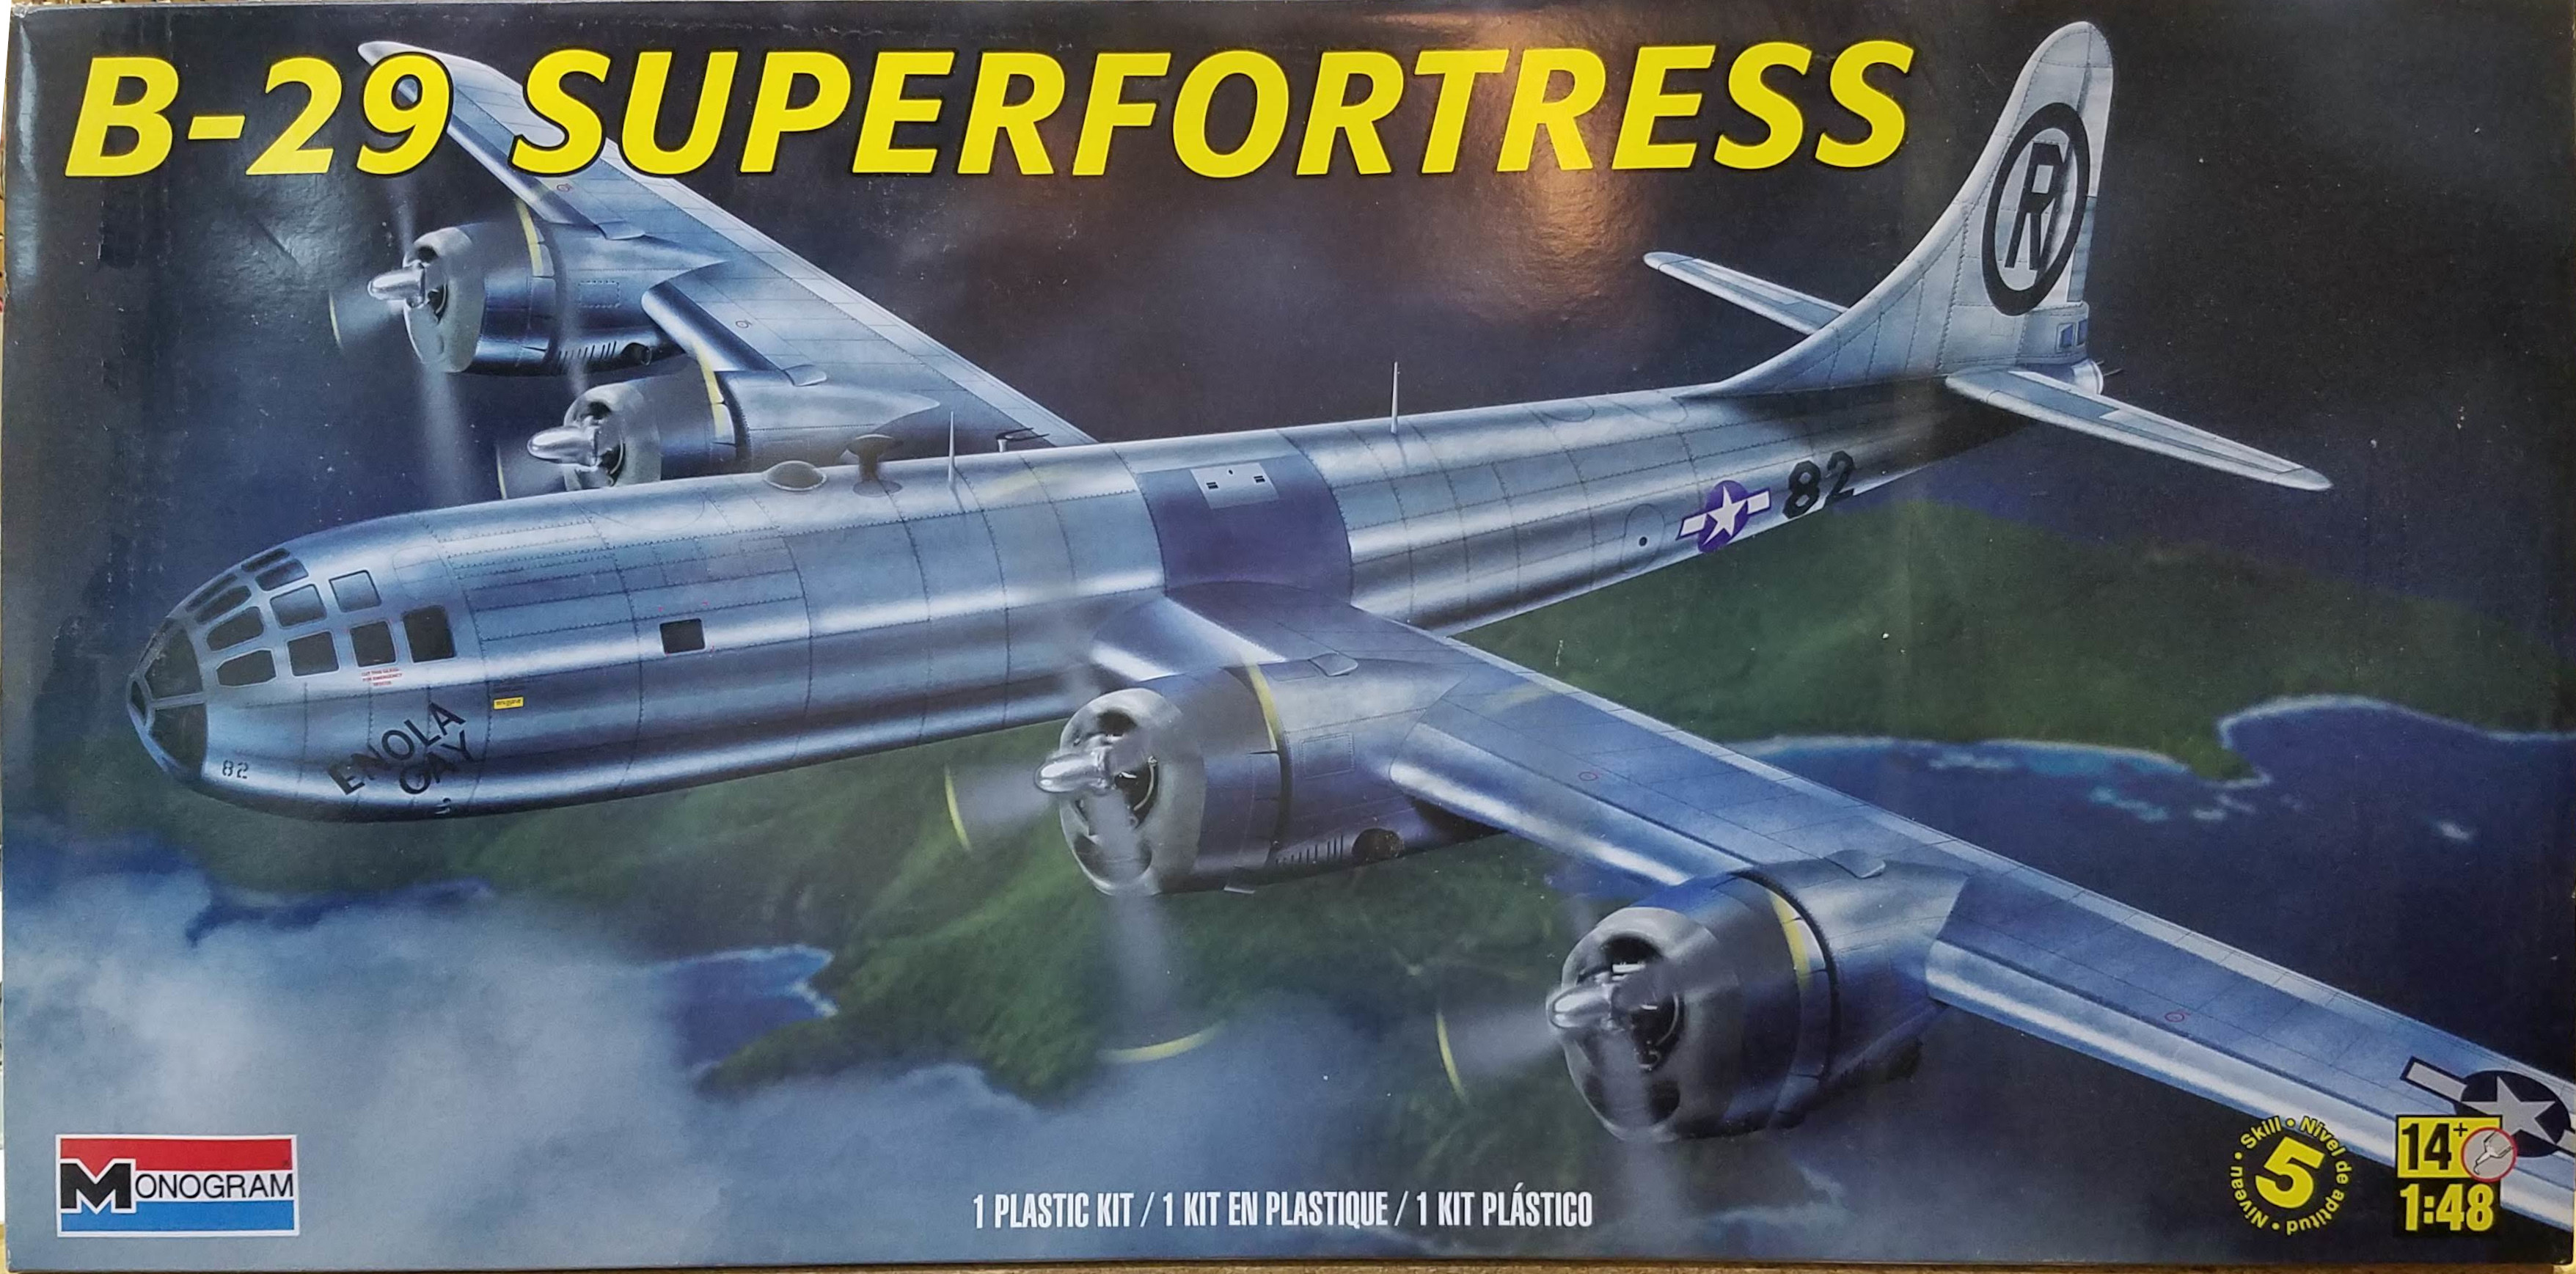 B-29 Superfortress Box Art (Monogram)